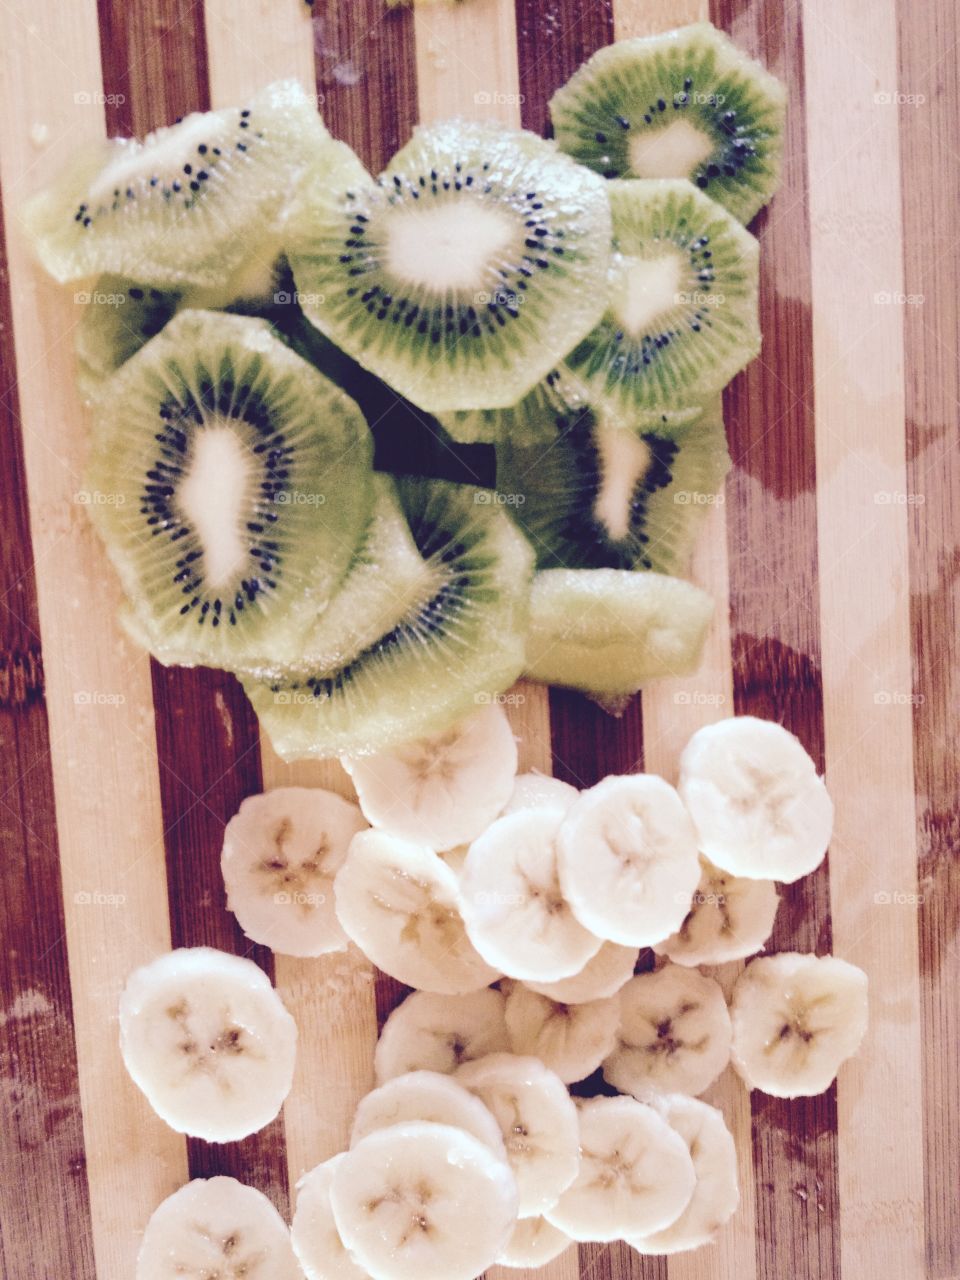 Kiwi & banana. Healthy :)